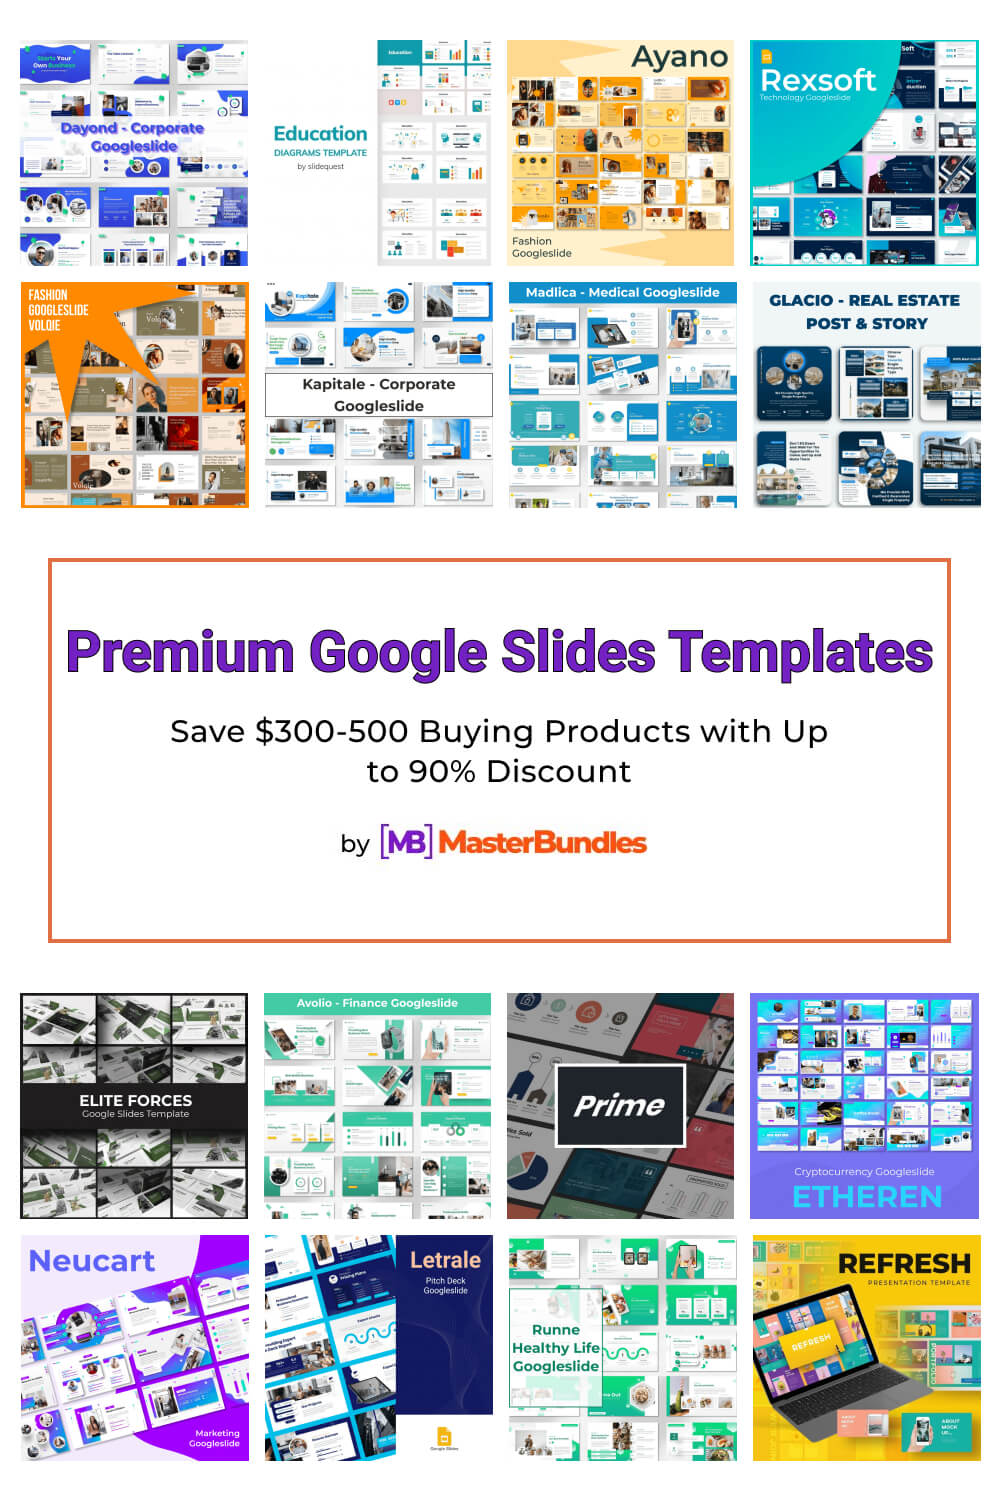 premium google slides templates pinterest image.